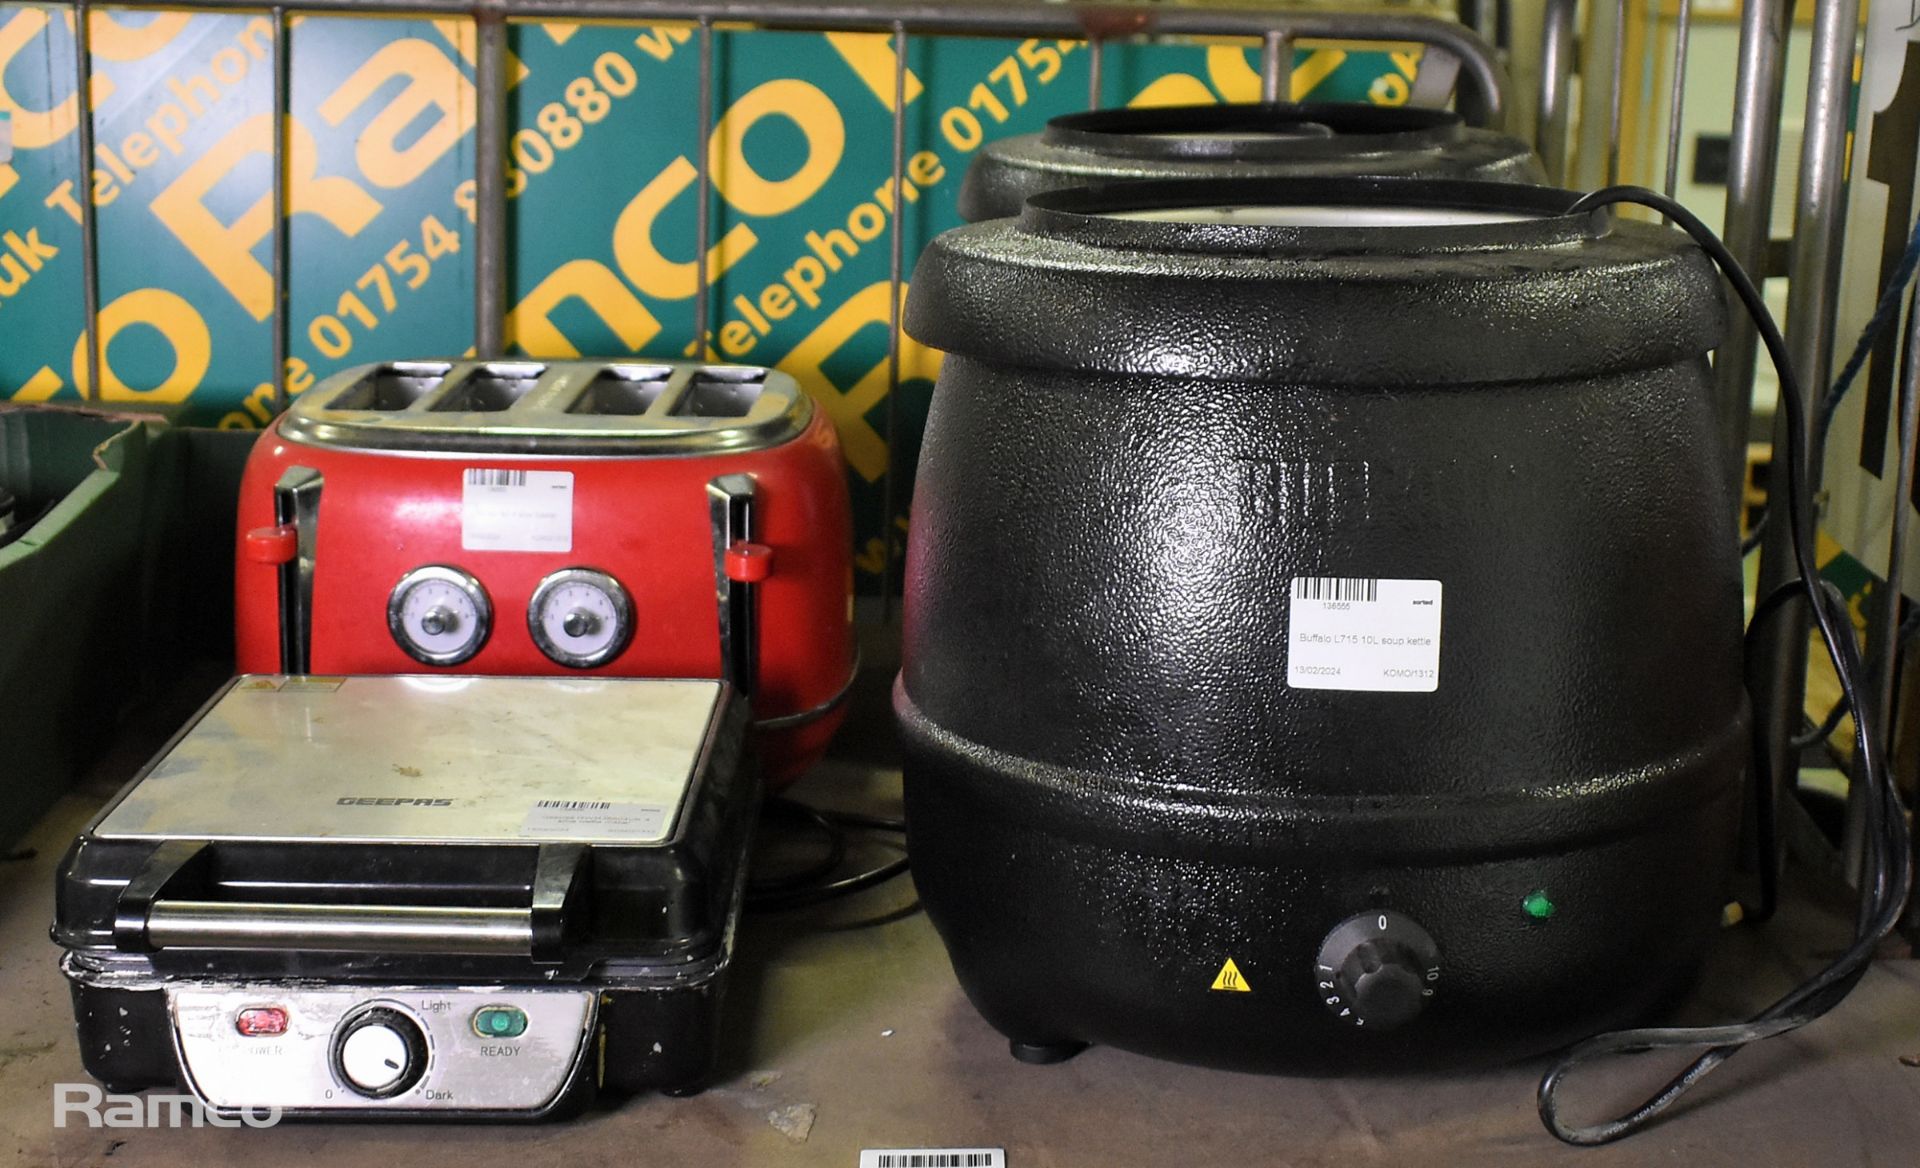 Wilko red 4 slice toaster, 2x Buffalo L715 10L soup kettles, Geepas GWM36503UK 4 slice waffle maker